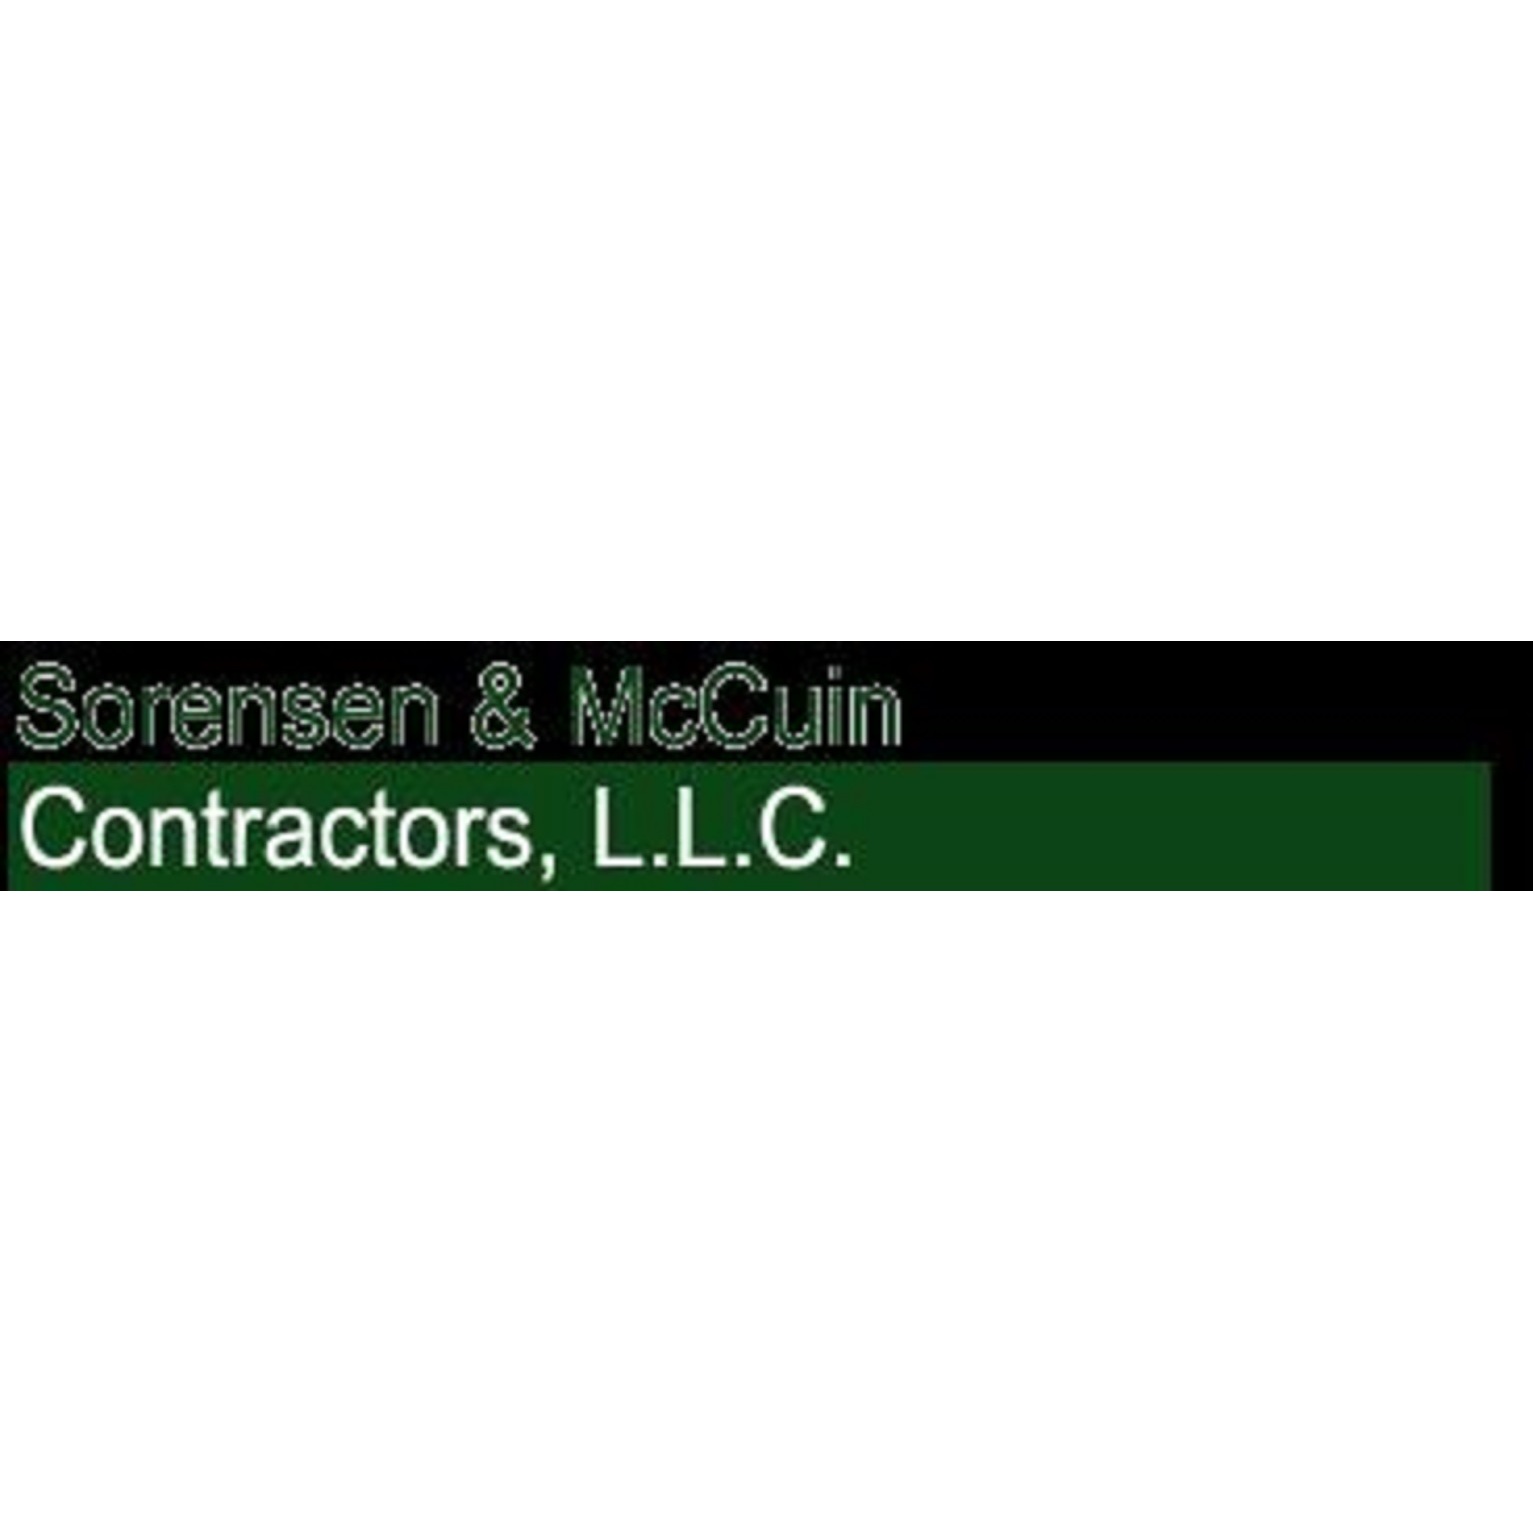 Sorensen & McCuin Contractors, L.L.C.